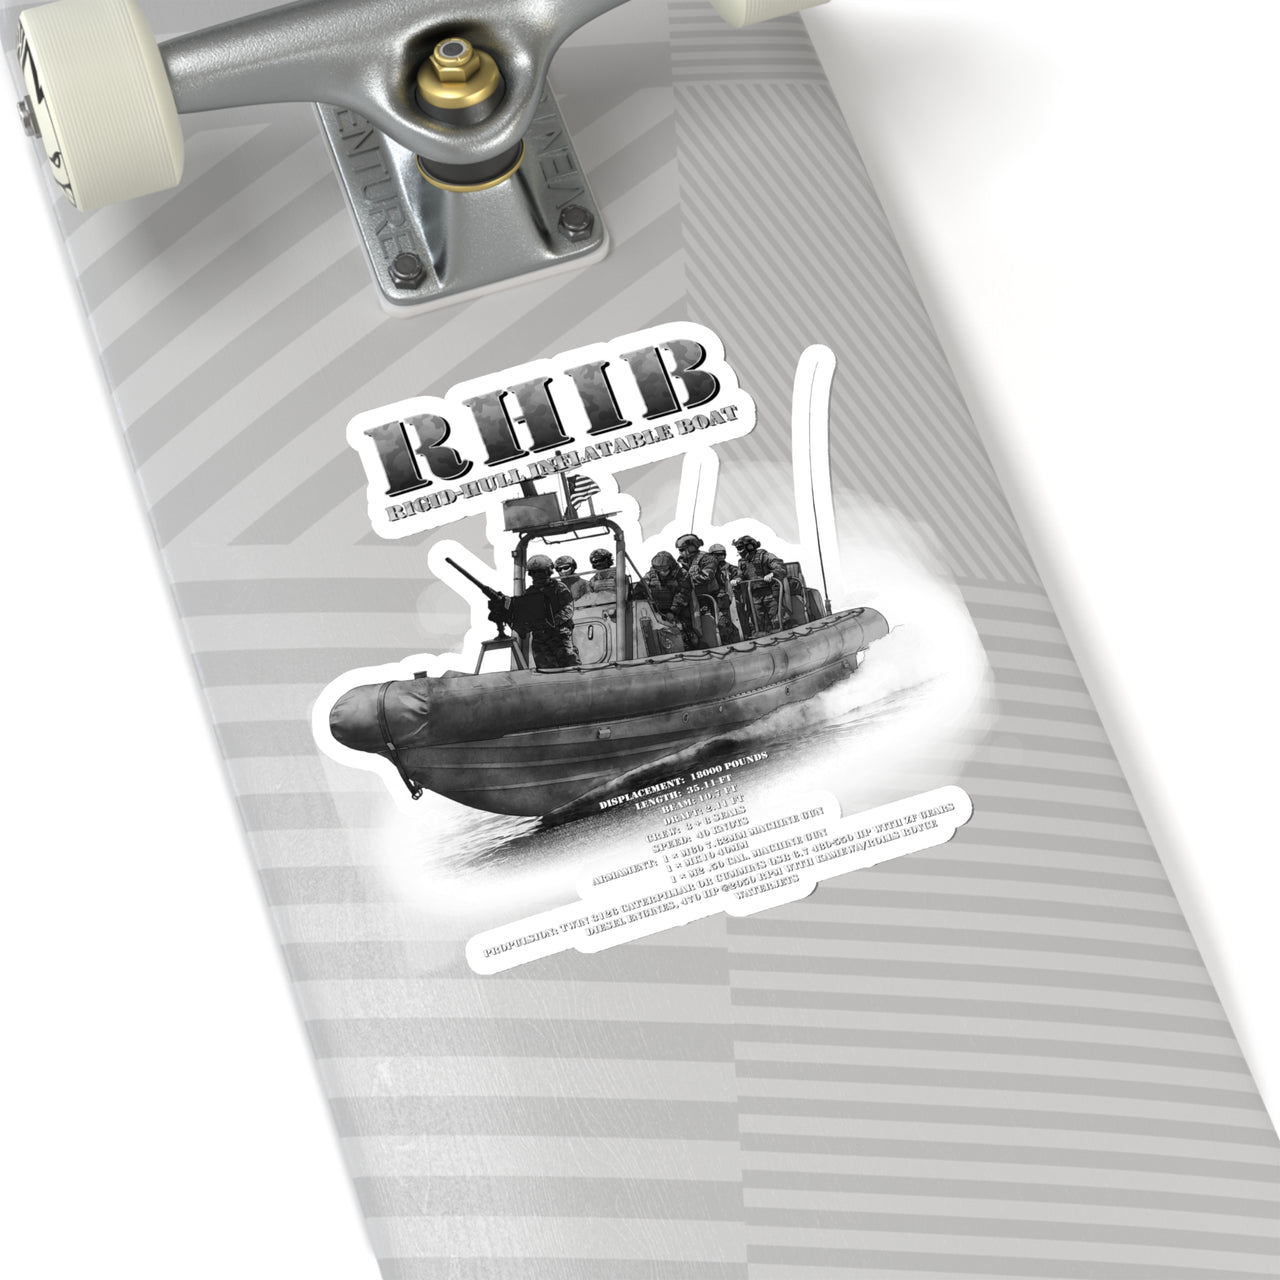 RHiB - Rigid Hull Inflatable Boat Sticker